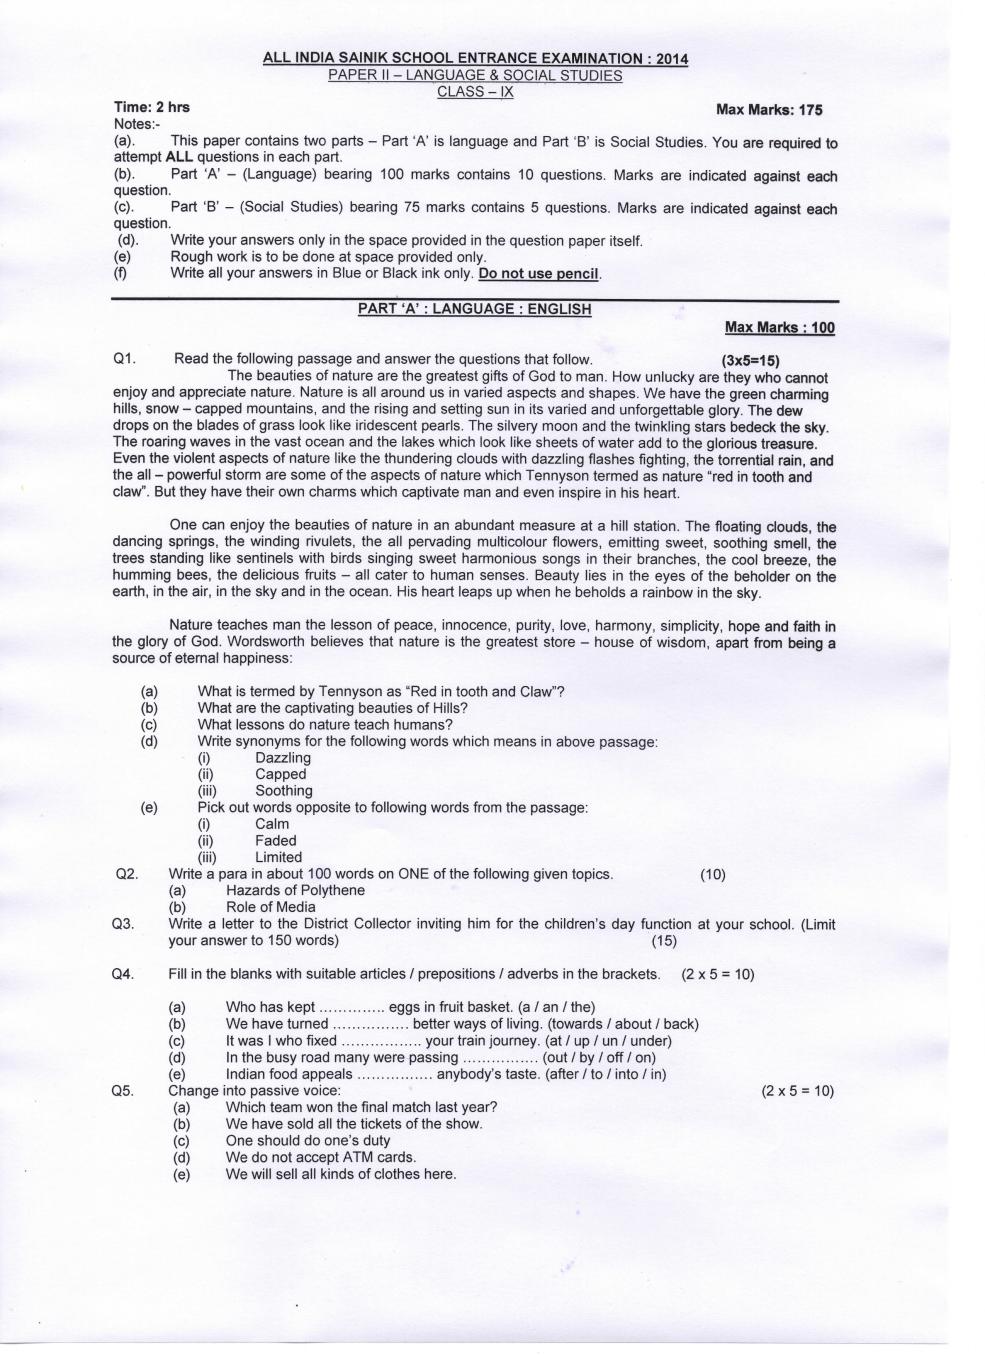 AISSEE 2014 Question Paper for Class 9 | Sainik School Entrance Exam (Paper 2) - Page 1